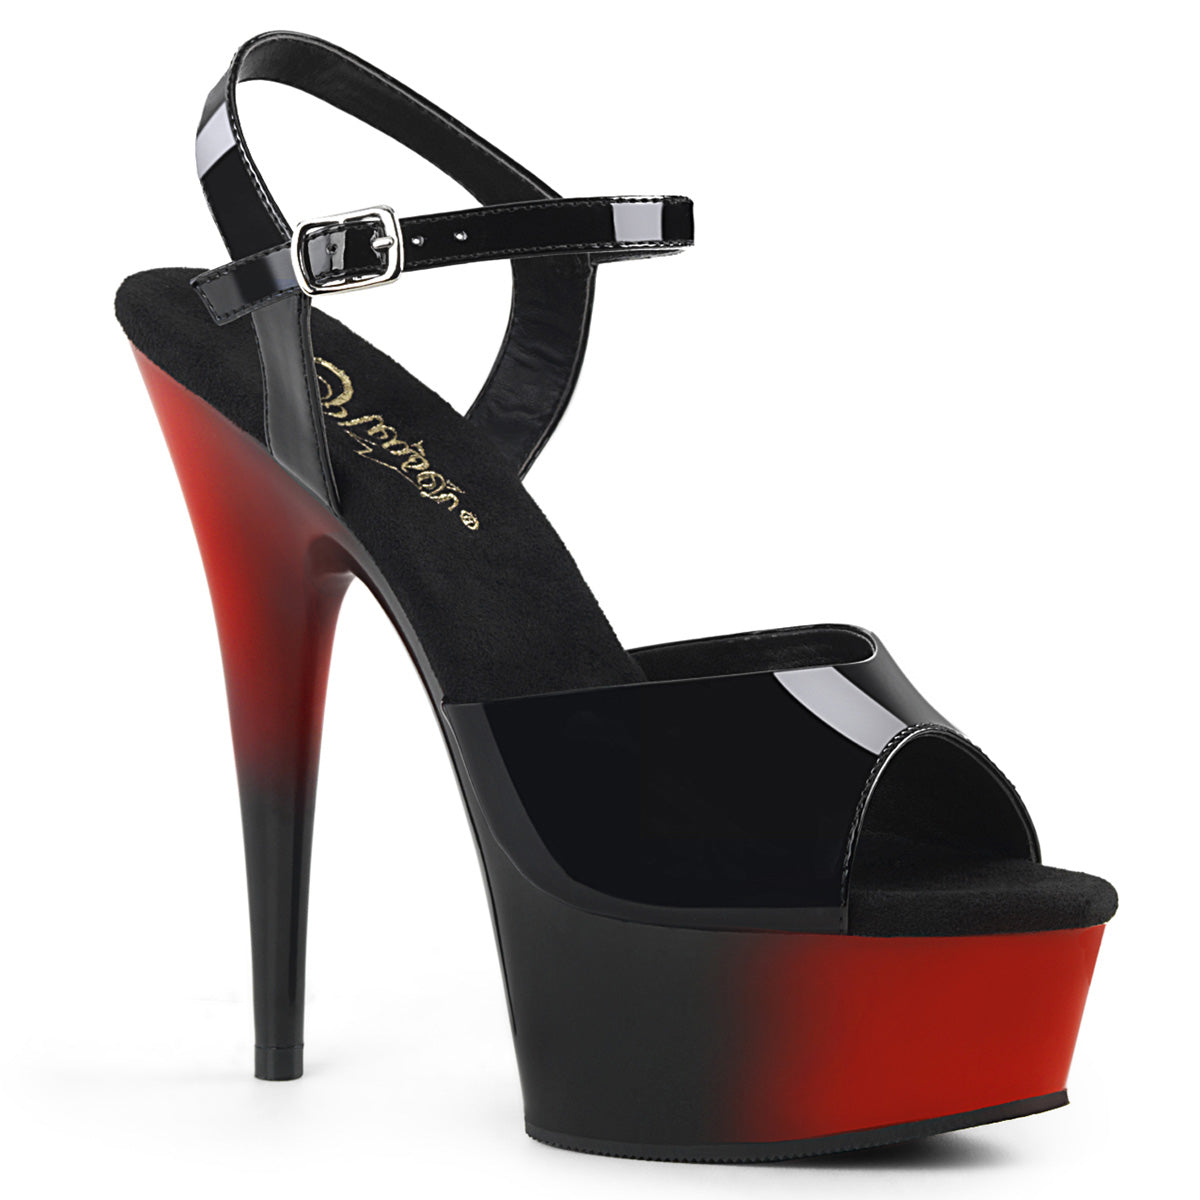 DELIGHT-609BR 6" Heel Black and Red  Stripper Platforms High Heels